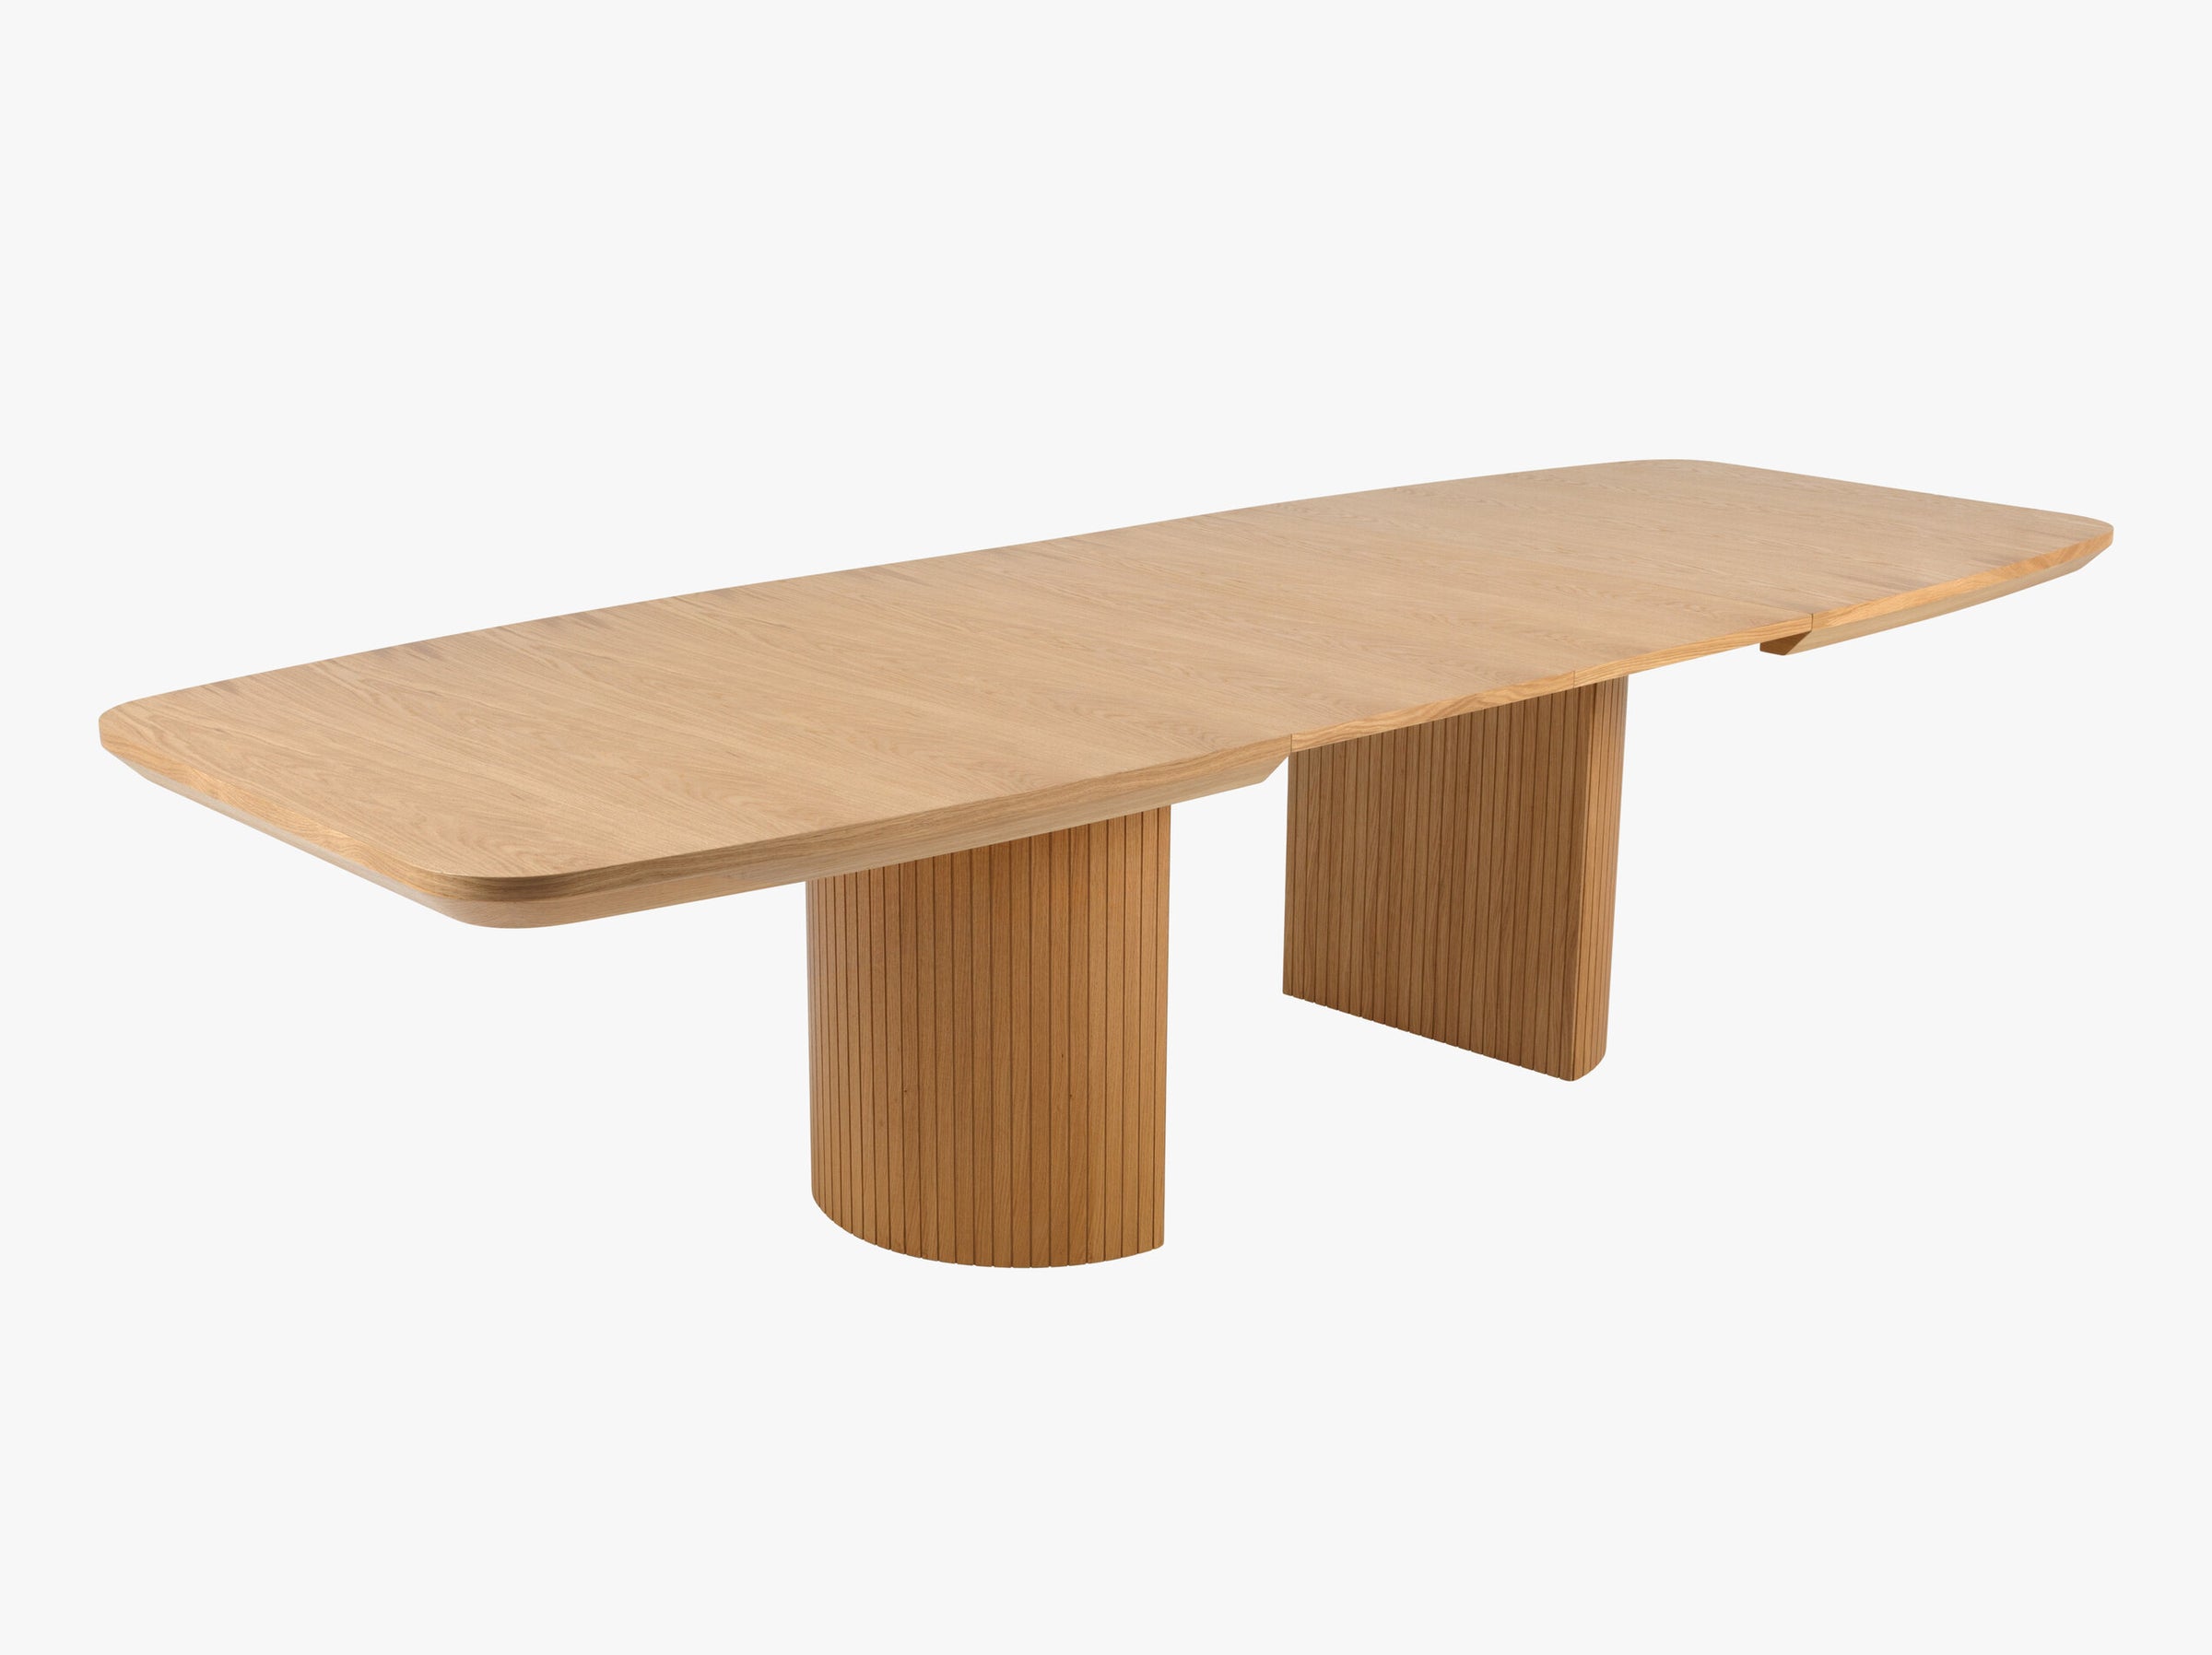 Mana tables & chairs wood natural oak veneer and oak